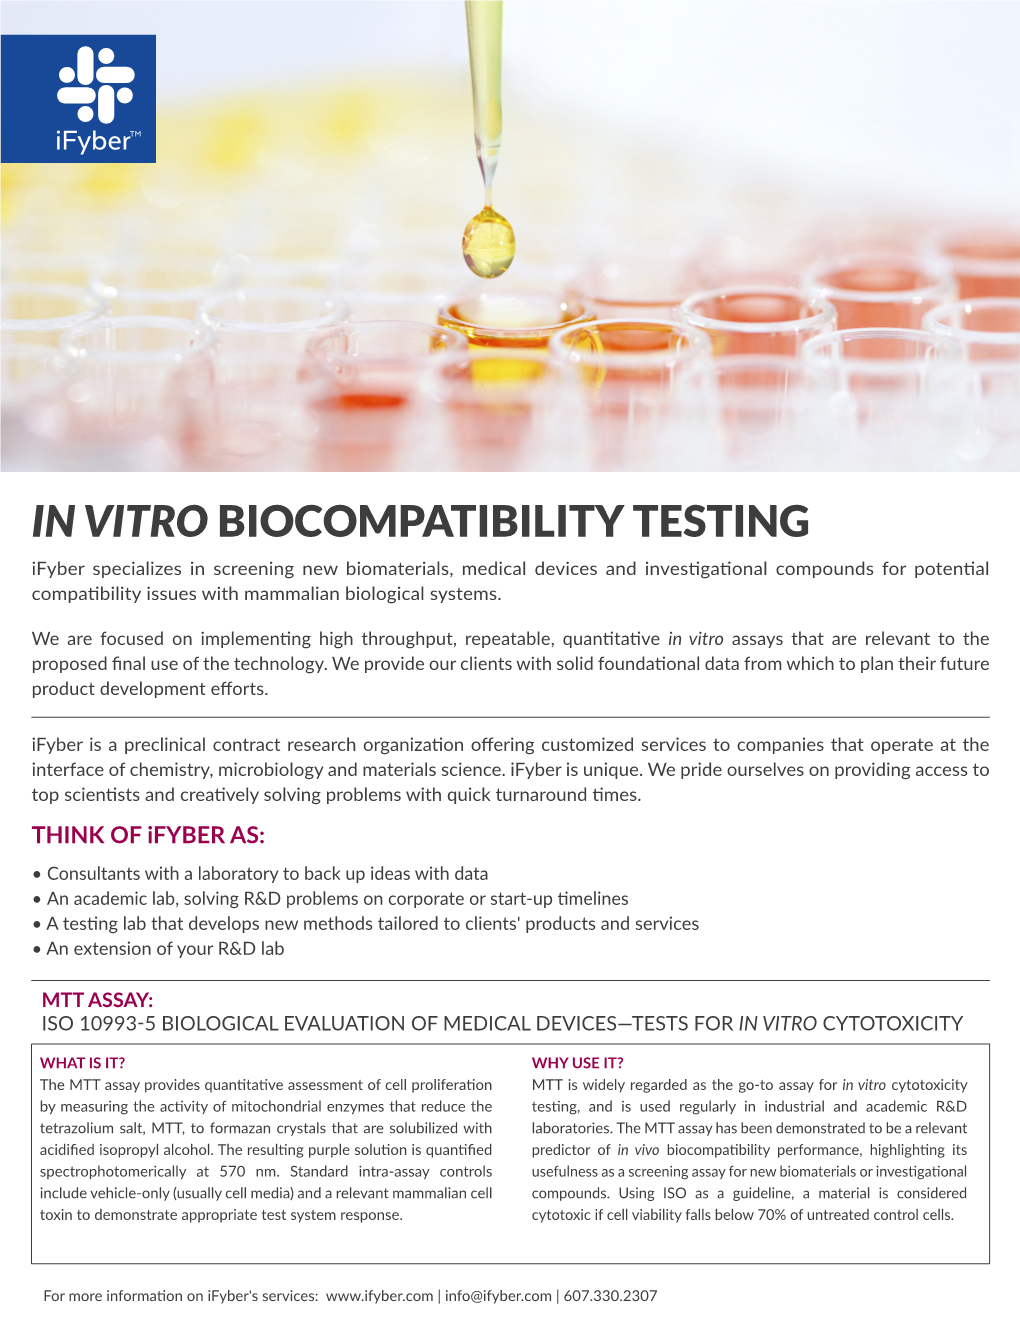 In Vitro Biocompatibility Testing